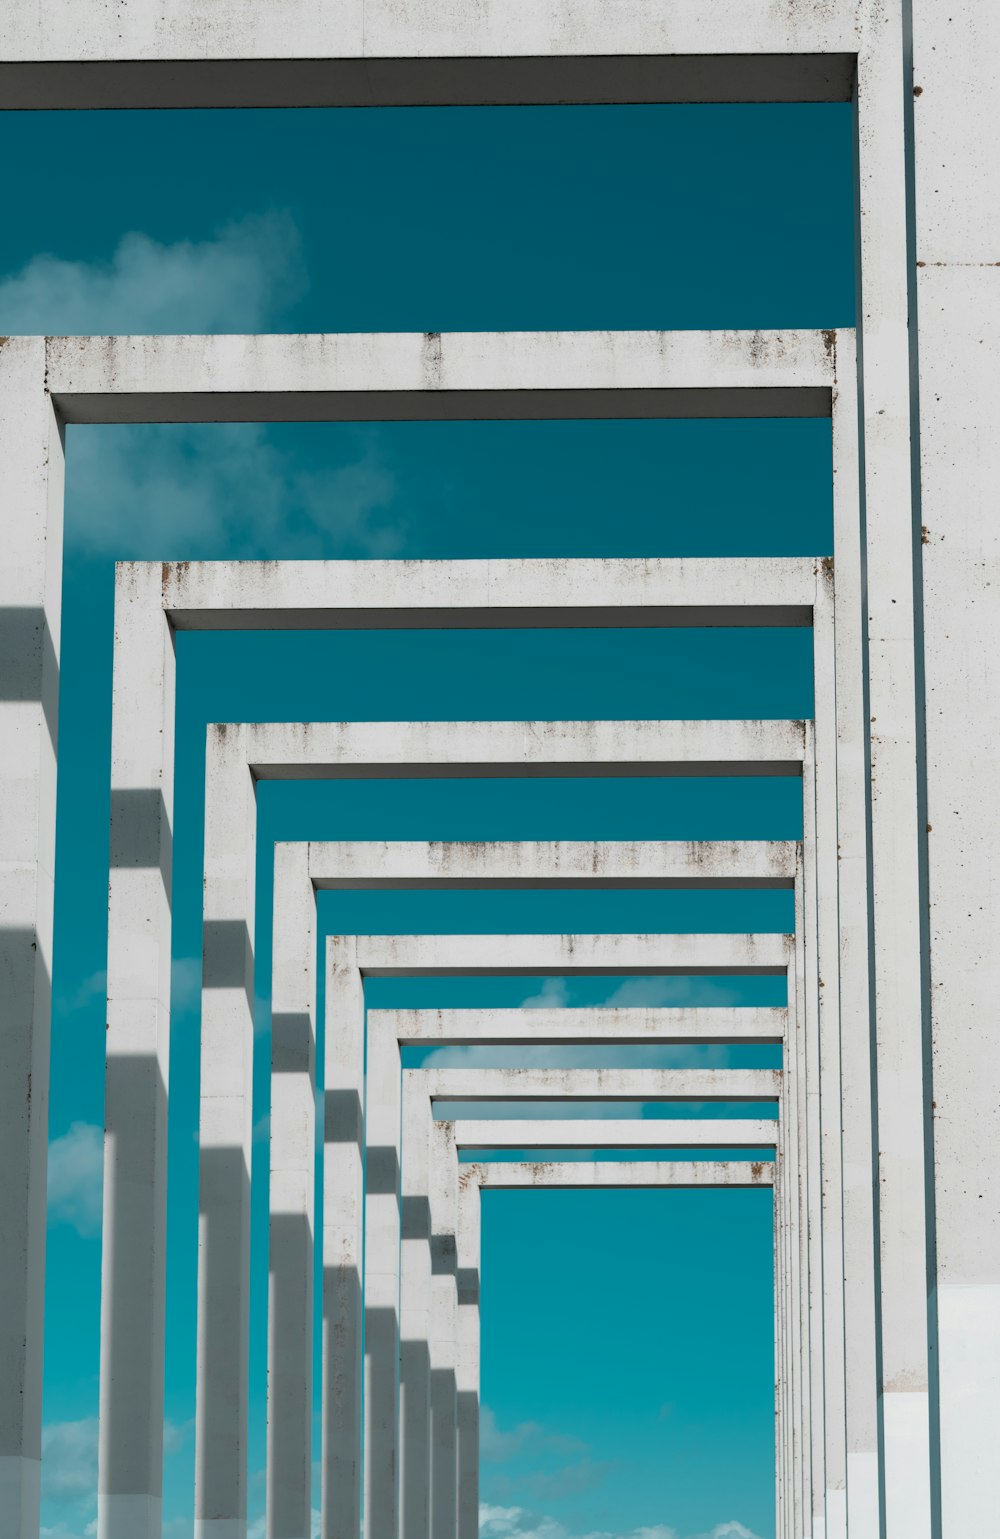 a row of white pillars against a blue sky